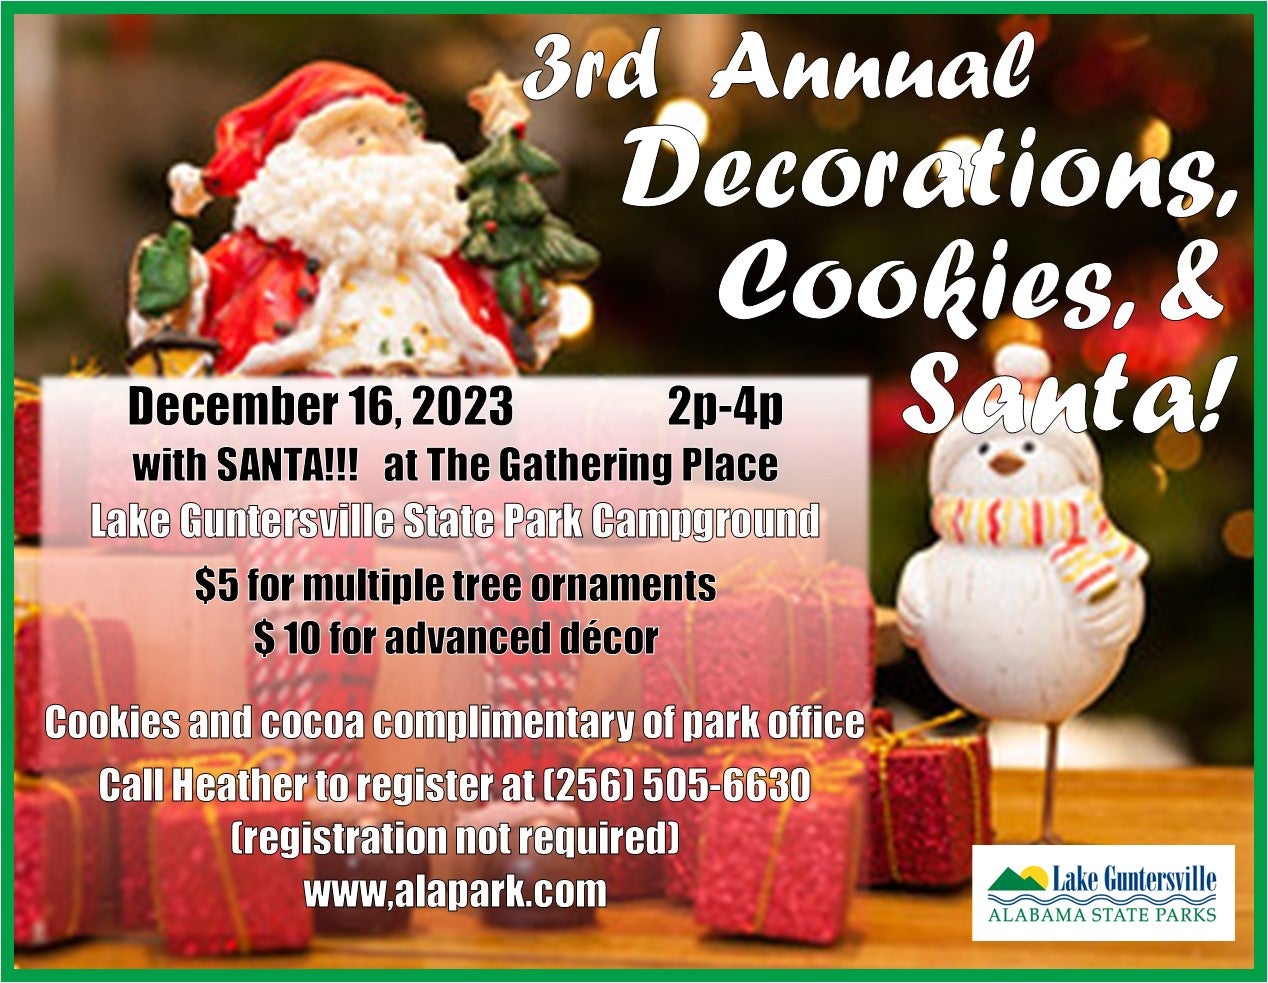 Lake Guntersville State Park Decorations, Cookies and Santa